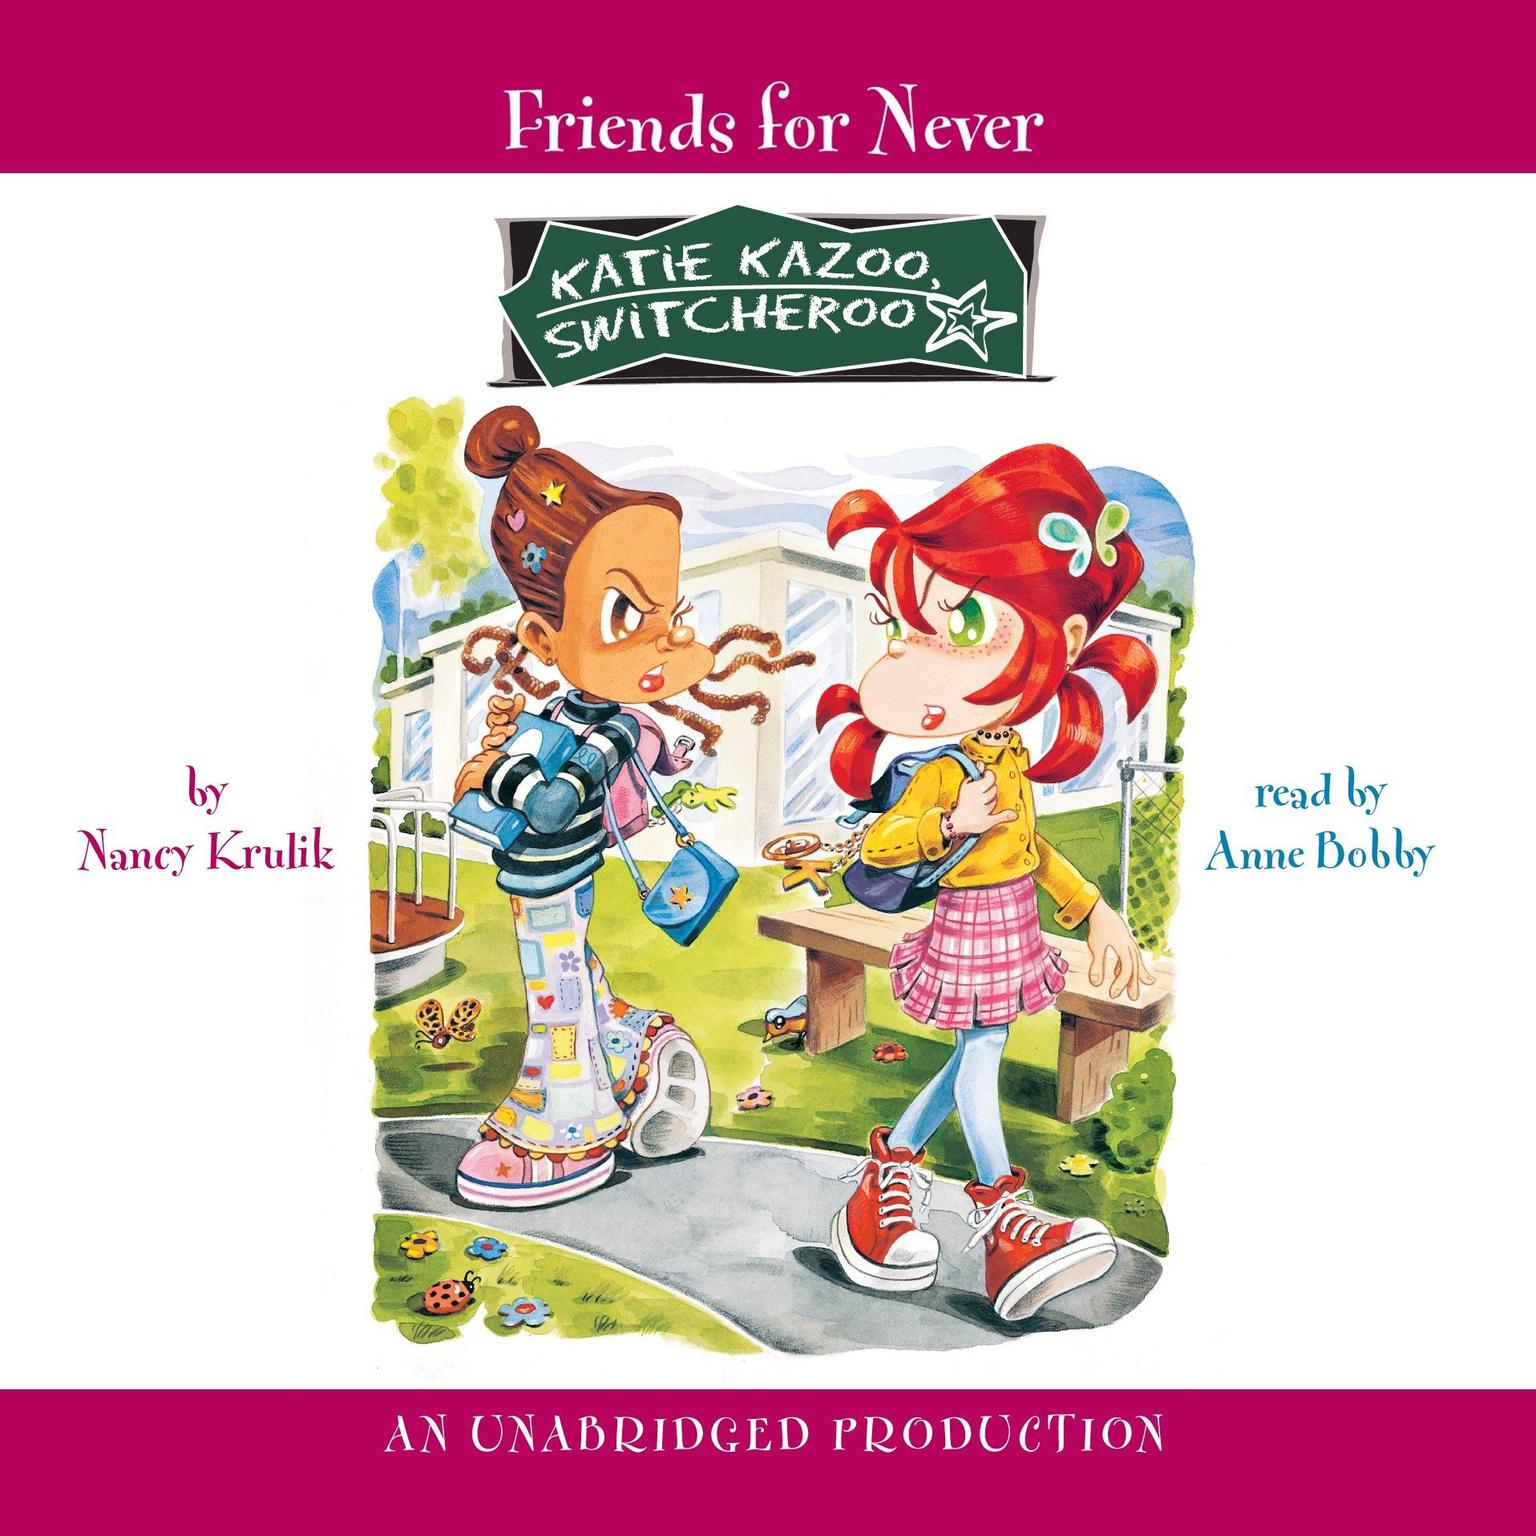 Katie Kazoo, Switcheroo #14: Friends for Never Audiobook, by Nancy Krulik